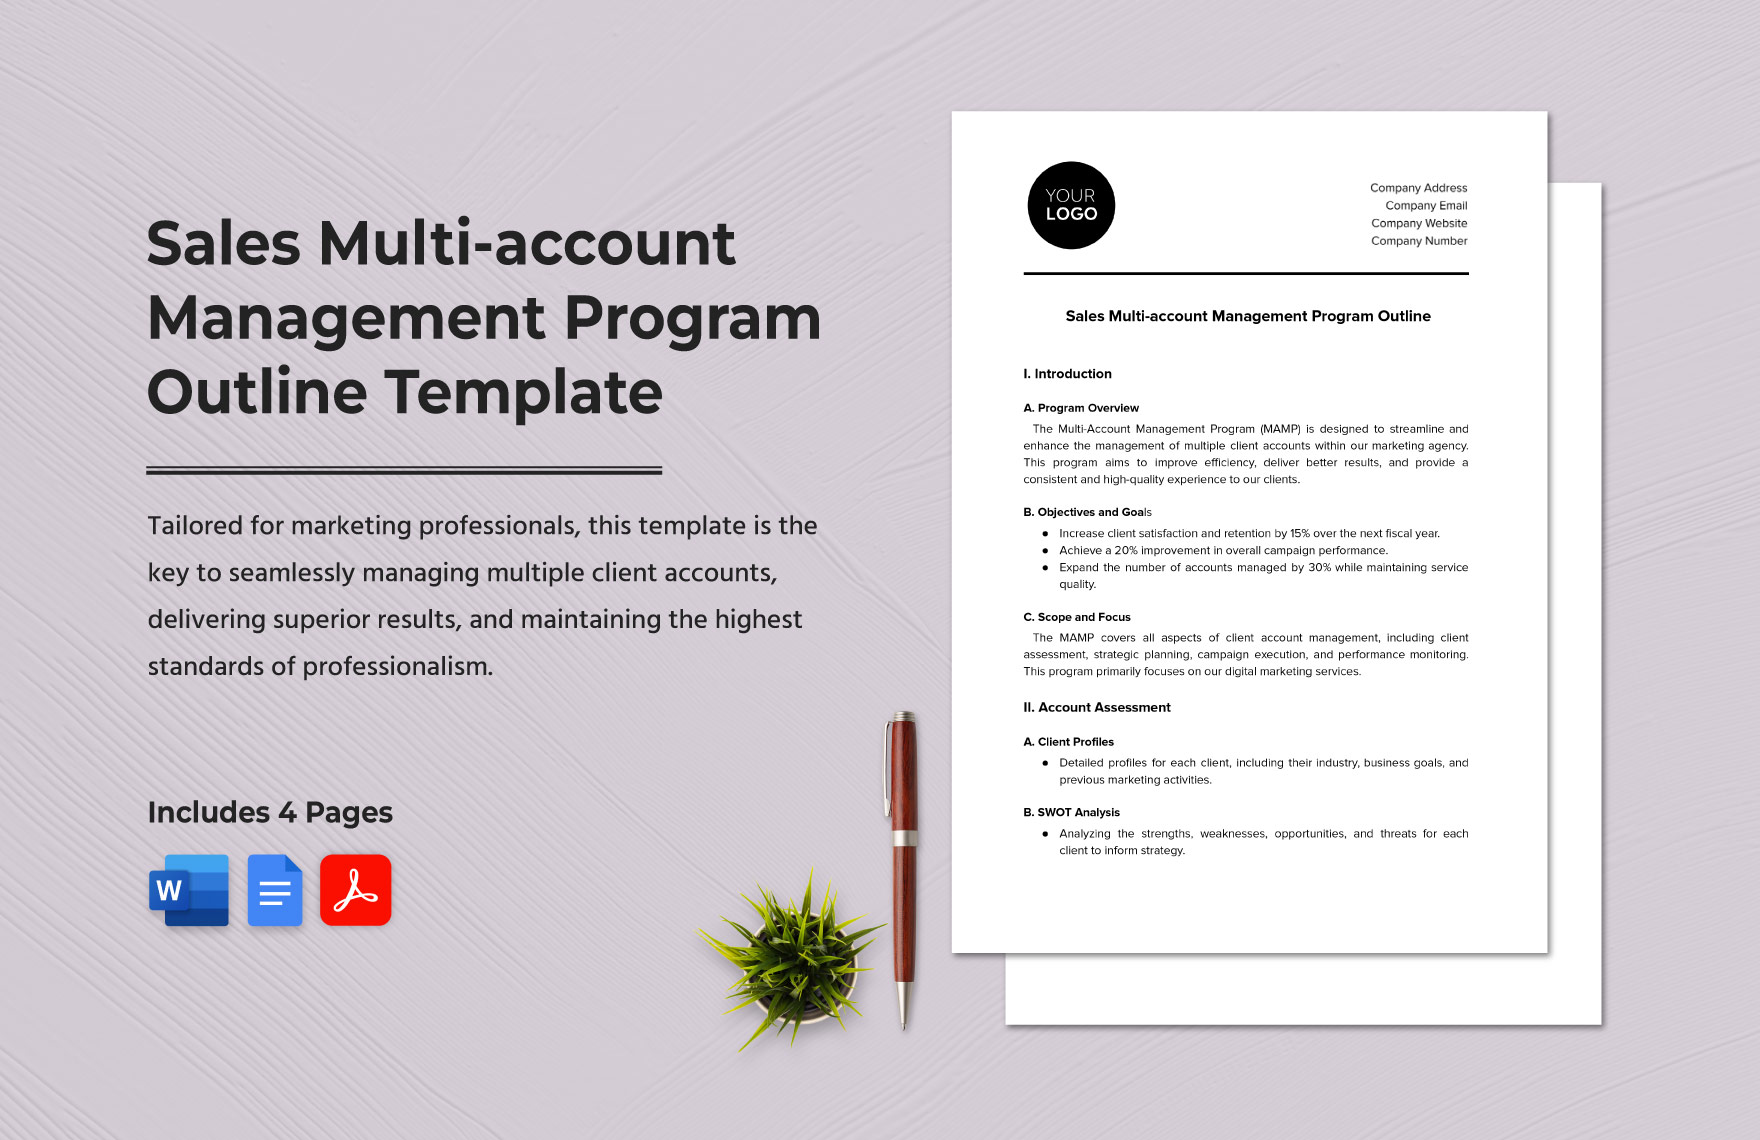 Sales Multi-account Management Program Outline Template in Word, Google Docs, PDF